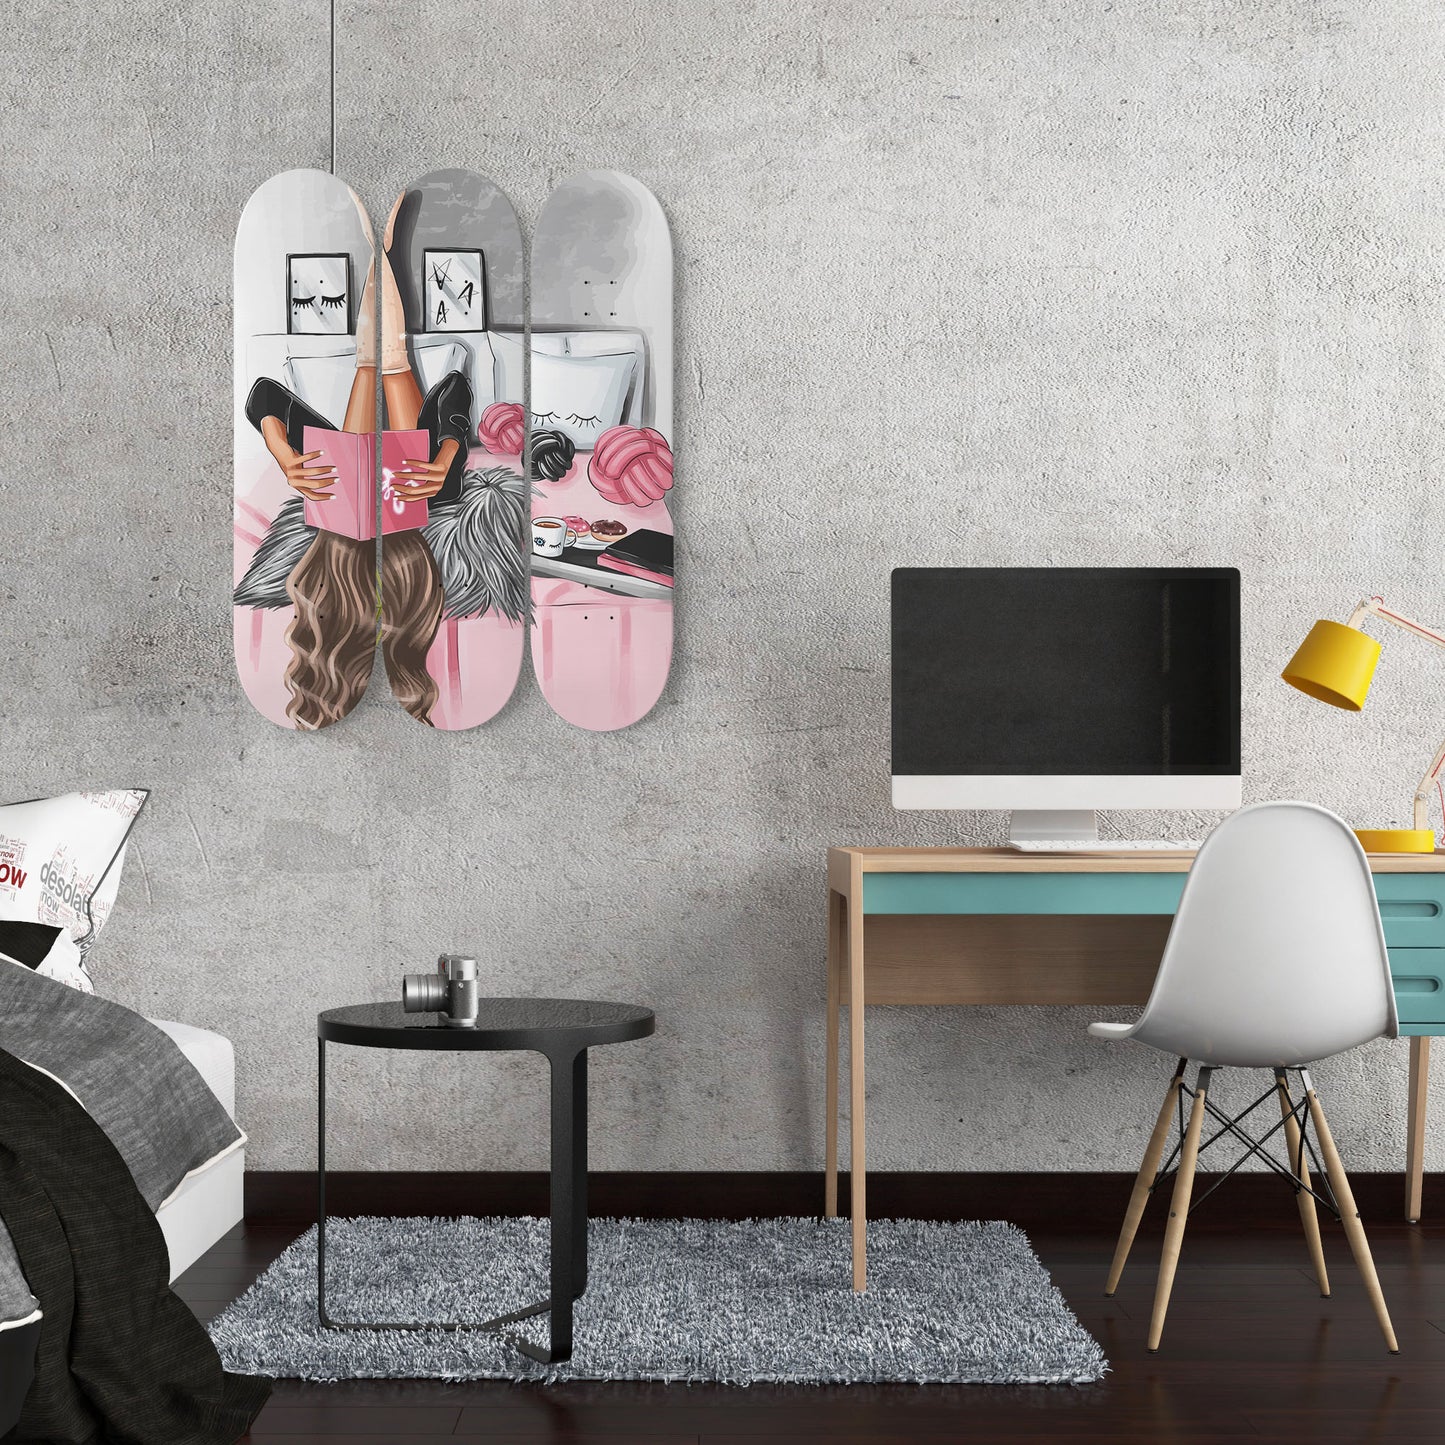 Fashion 5 | 3 Set of Skateboard Deck Wall Art | Wall Hanging Room Decor | Maple Wood | Birthday Gift